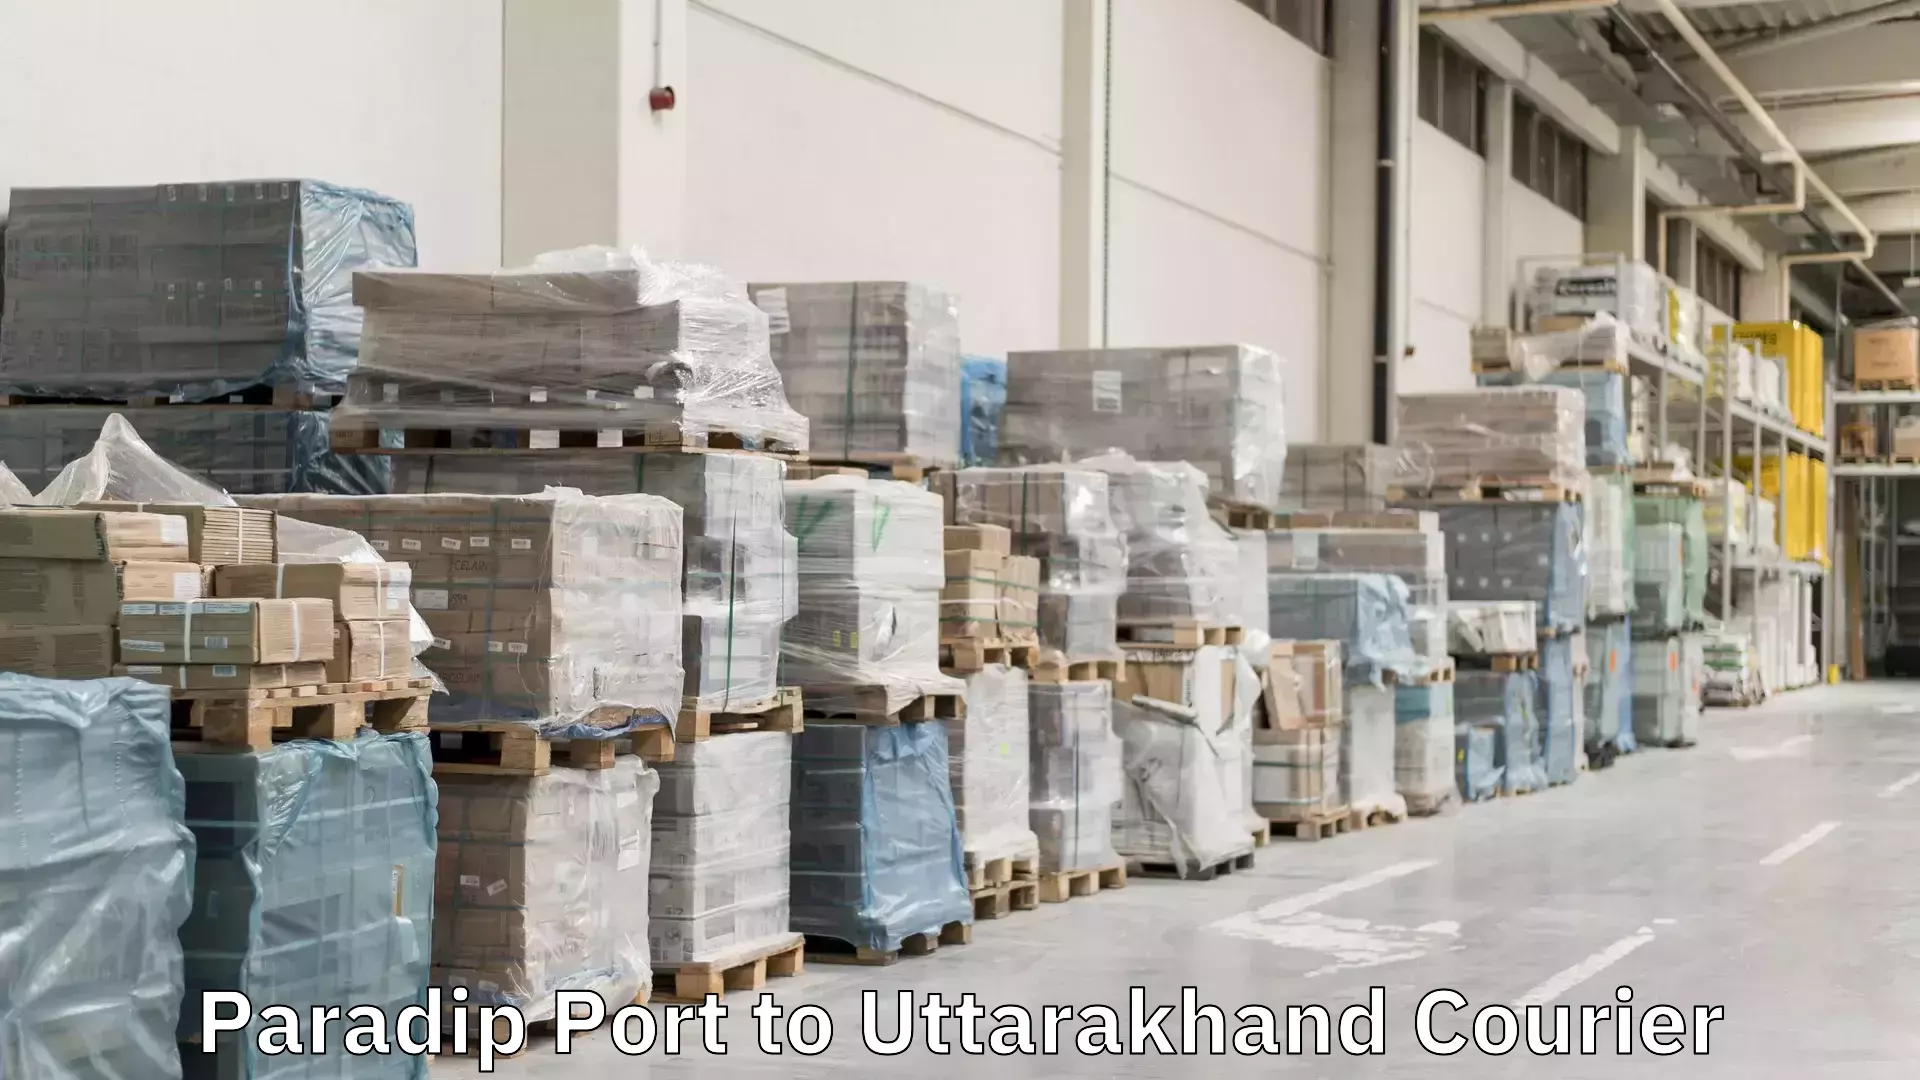 Cargo delivery service Paradip Port to Uttarakhand